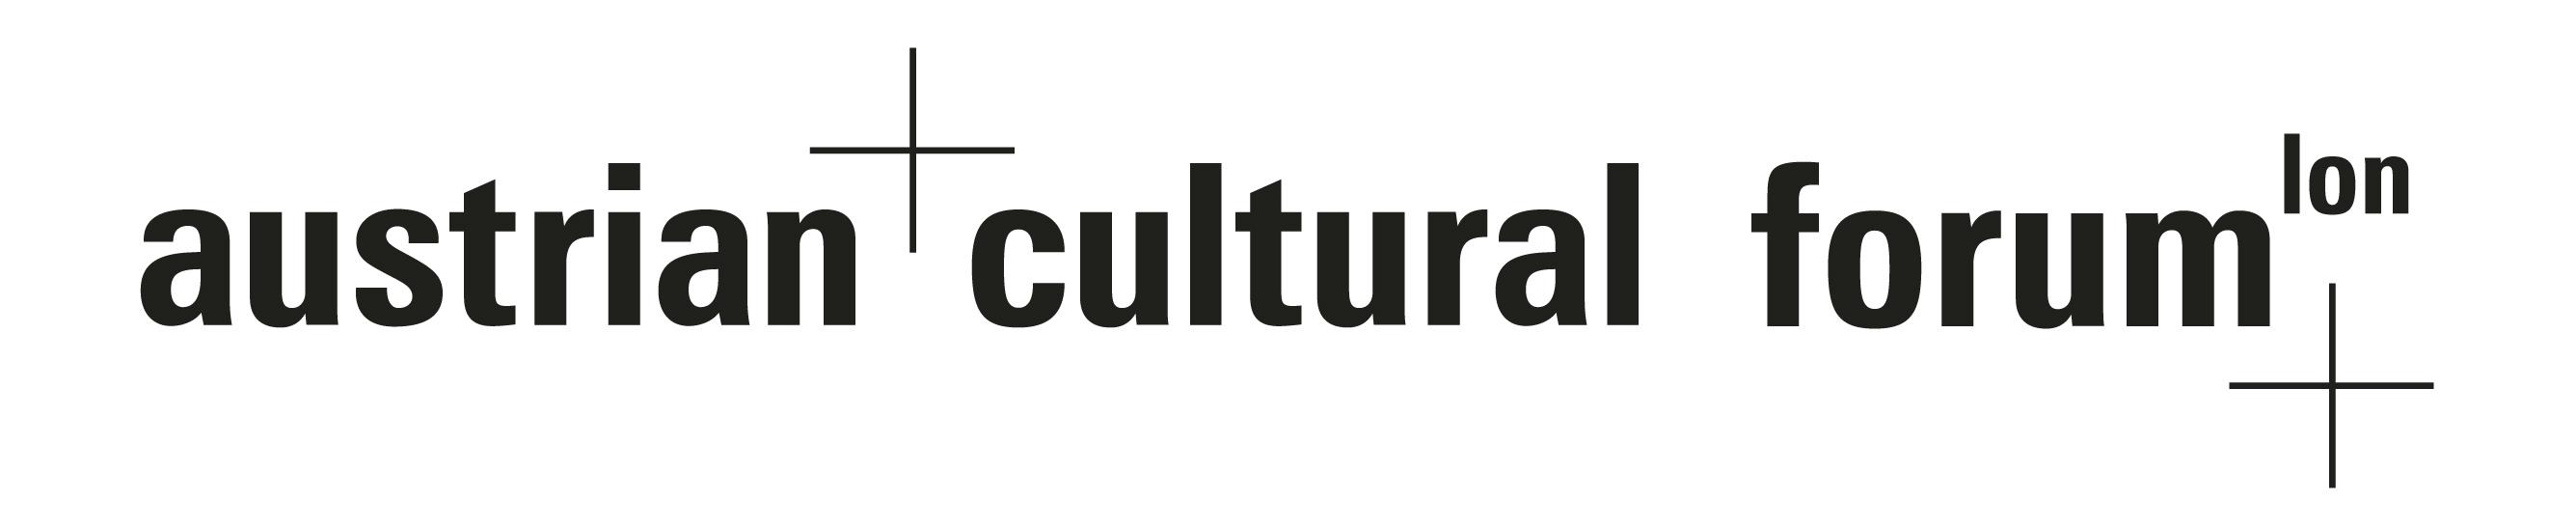 austrian-cultural-forum-logo.jpg